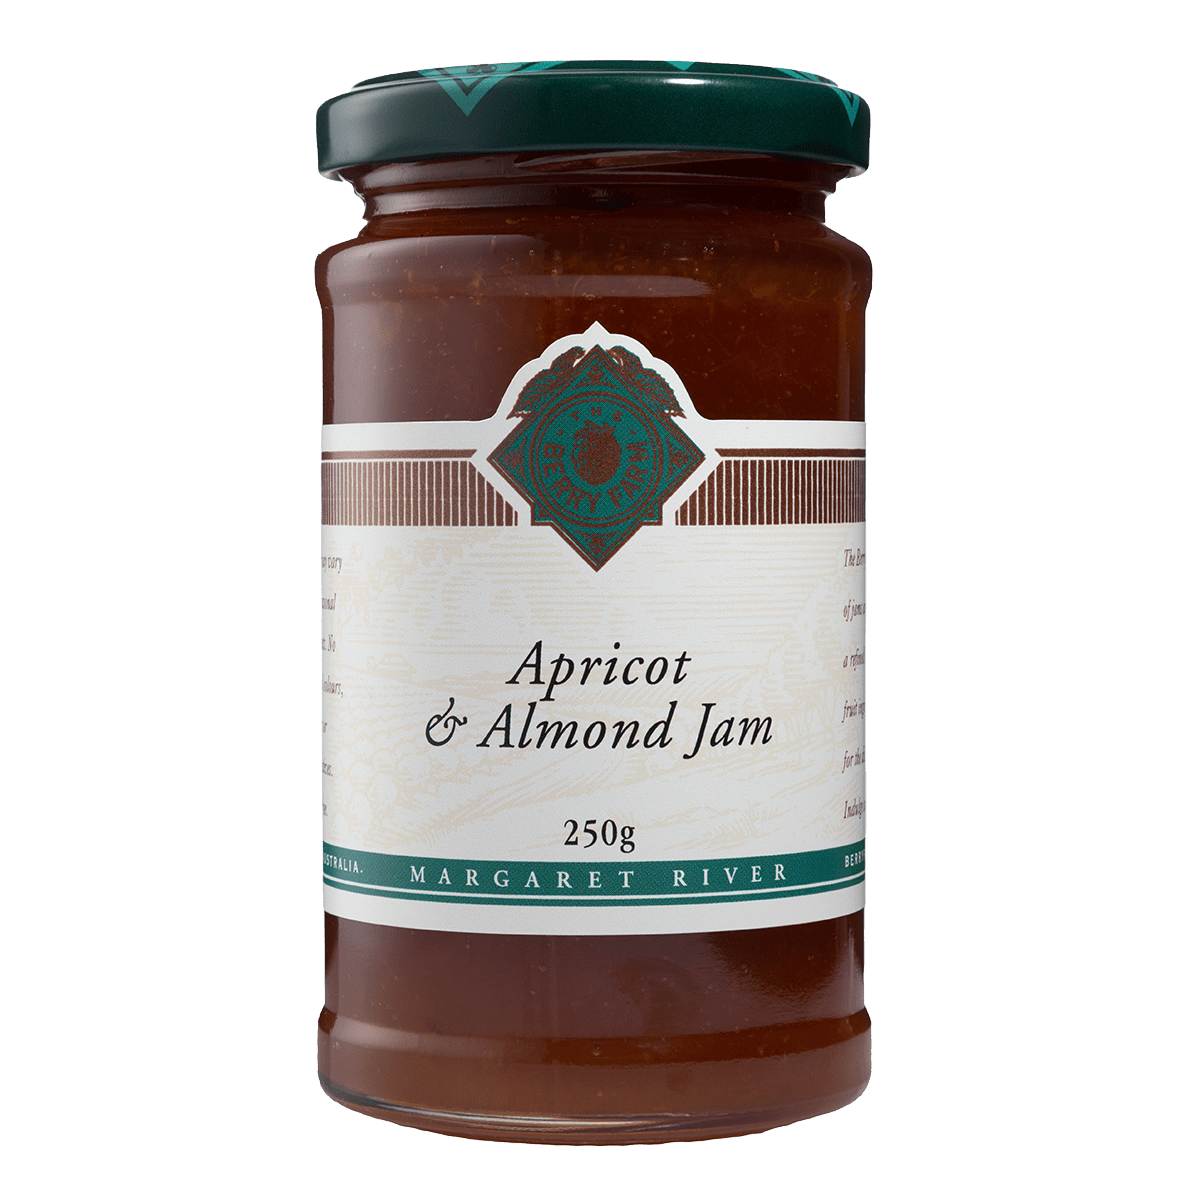 A jar of Apricot & Almond Jam